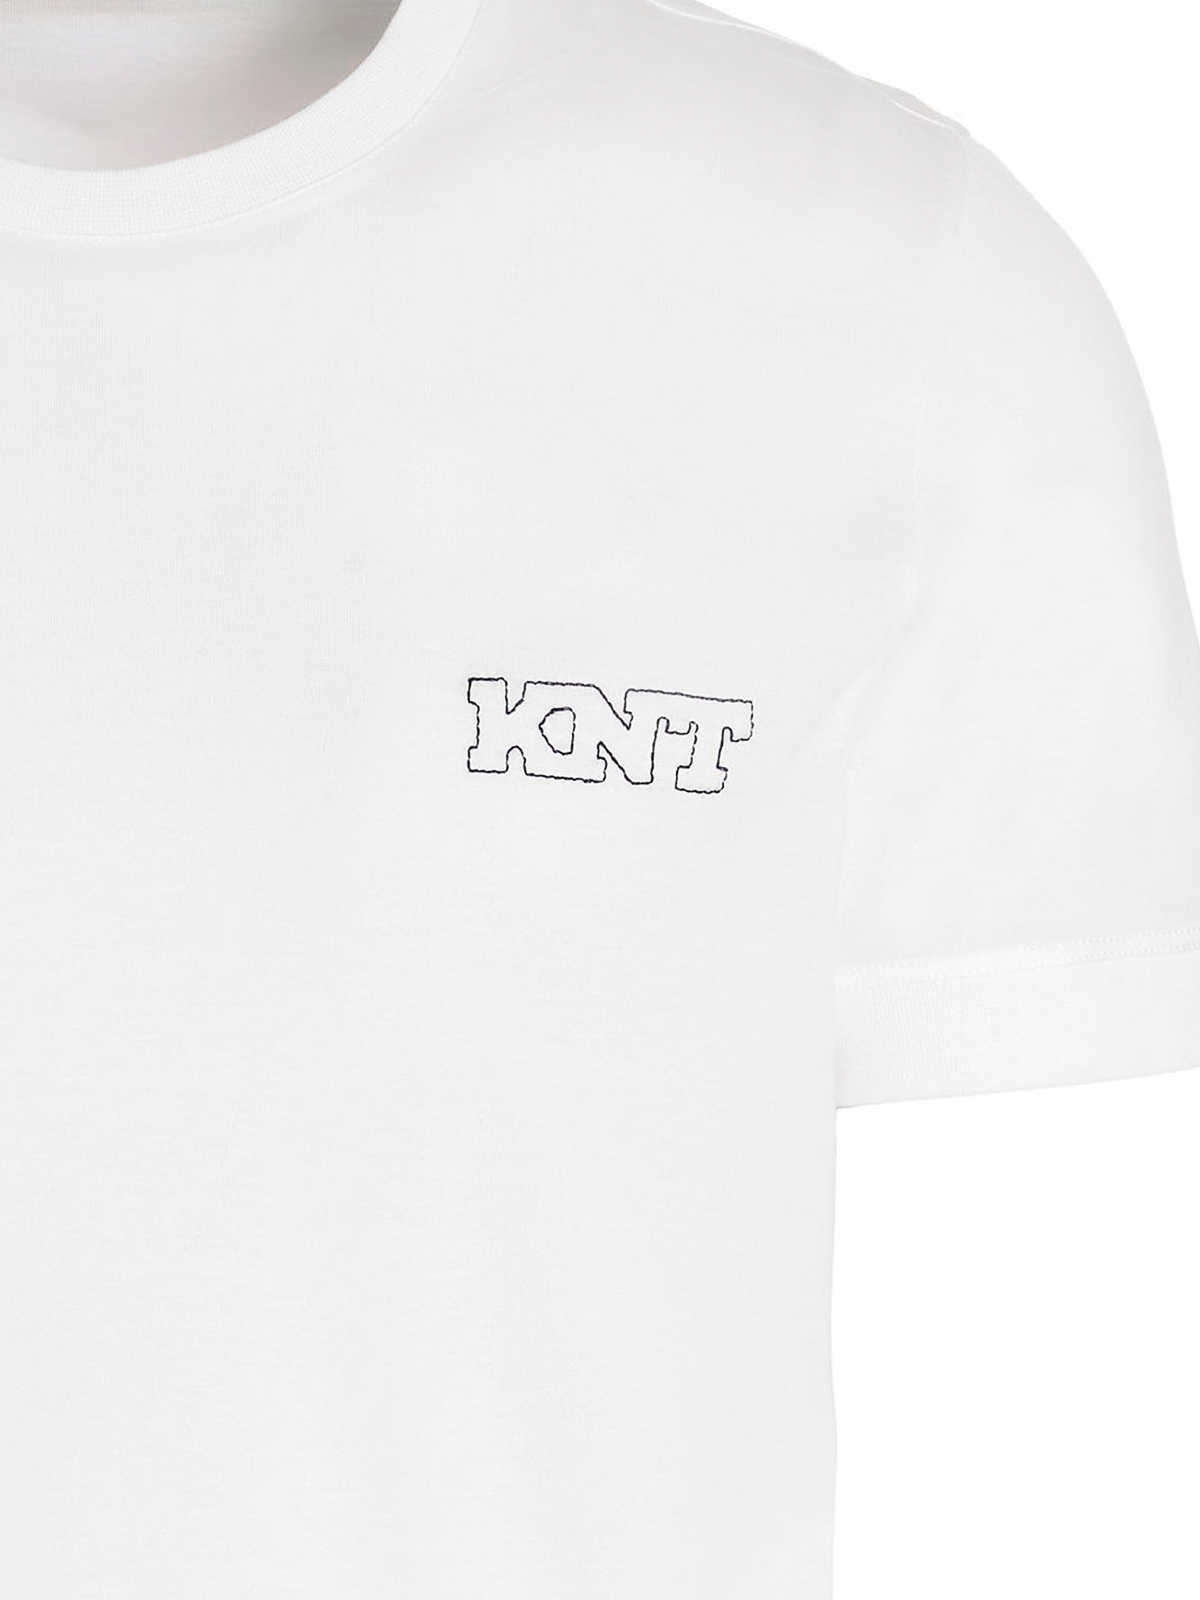 Tシャツ Kiton - Tシャツ - 白 - UMM02684 | iKRIX shop online